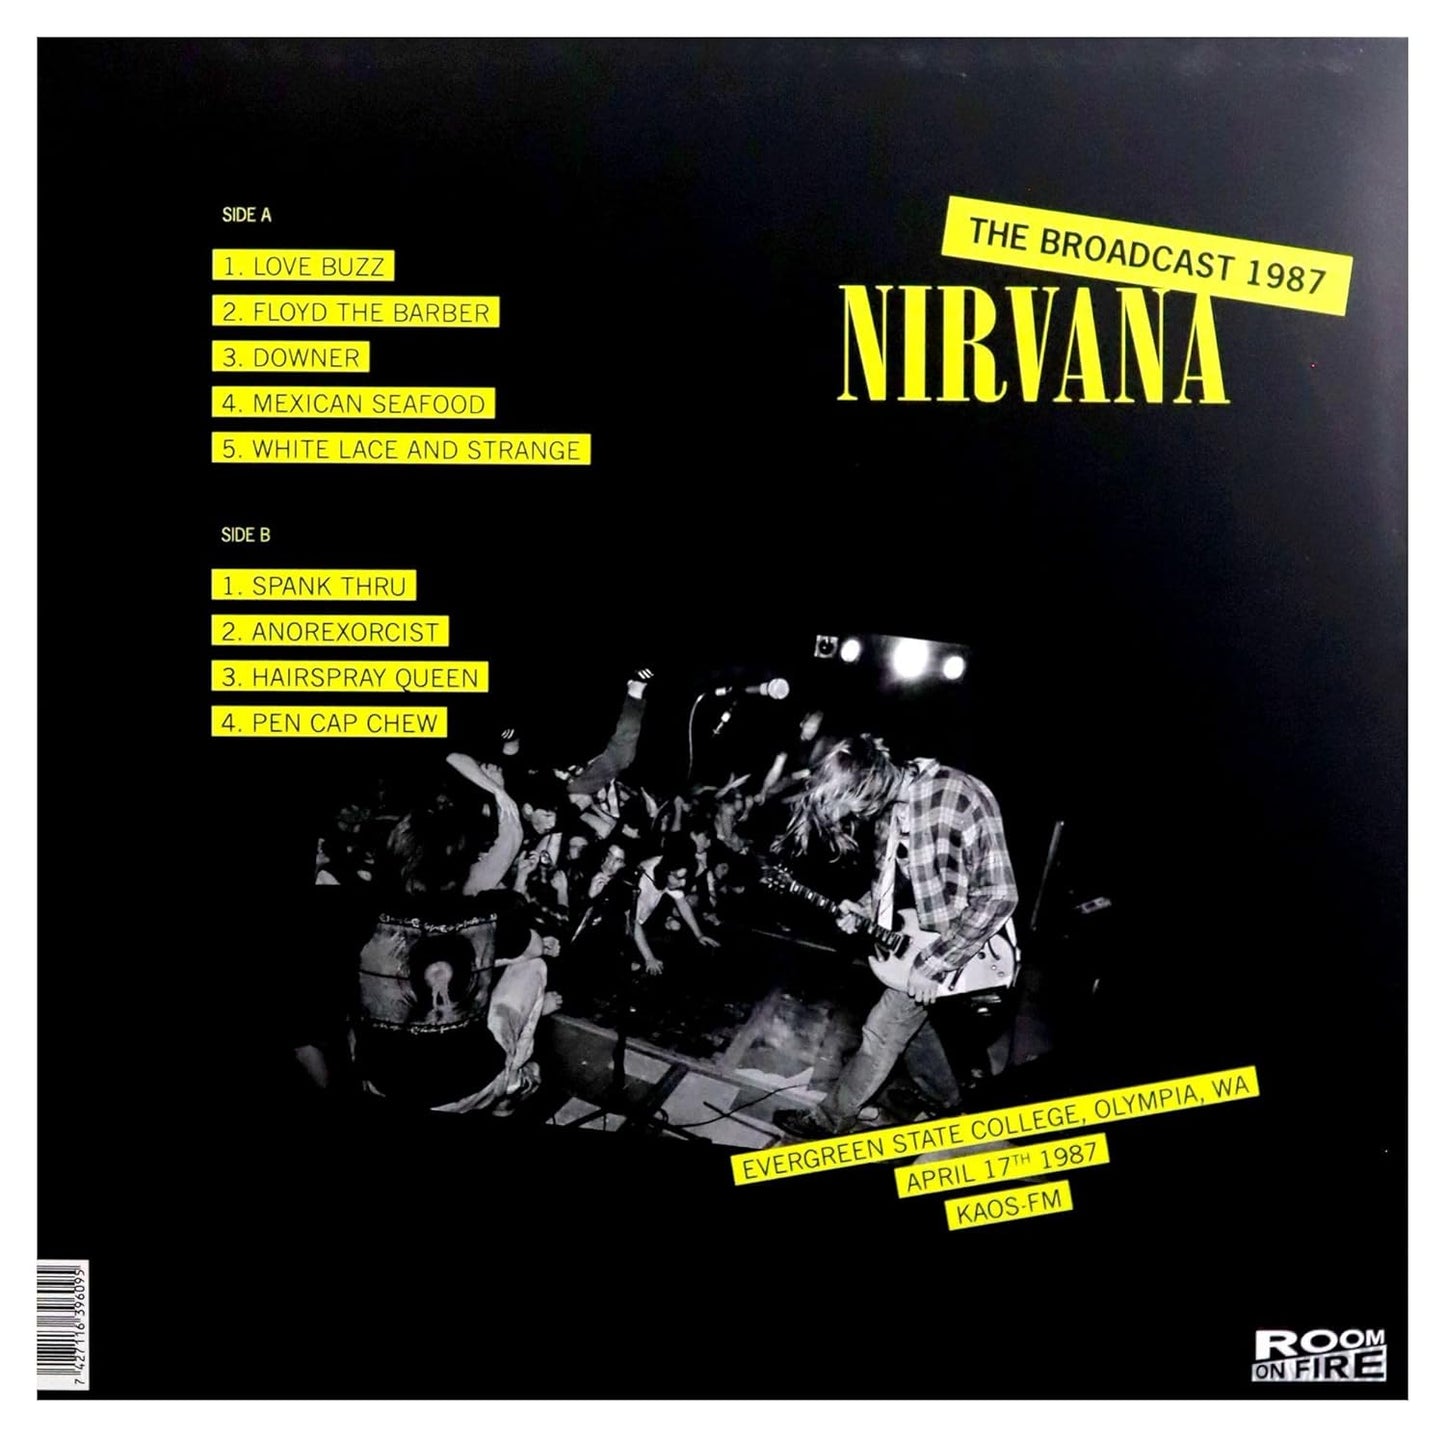 Nirvana - Broadcast 1987 (Broadcast Import) (LP)